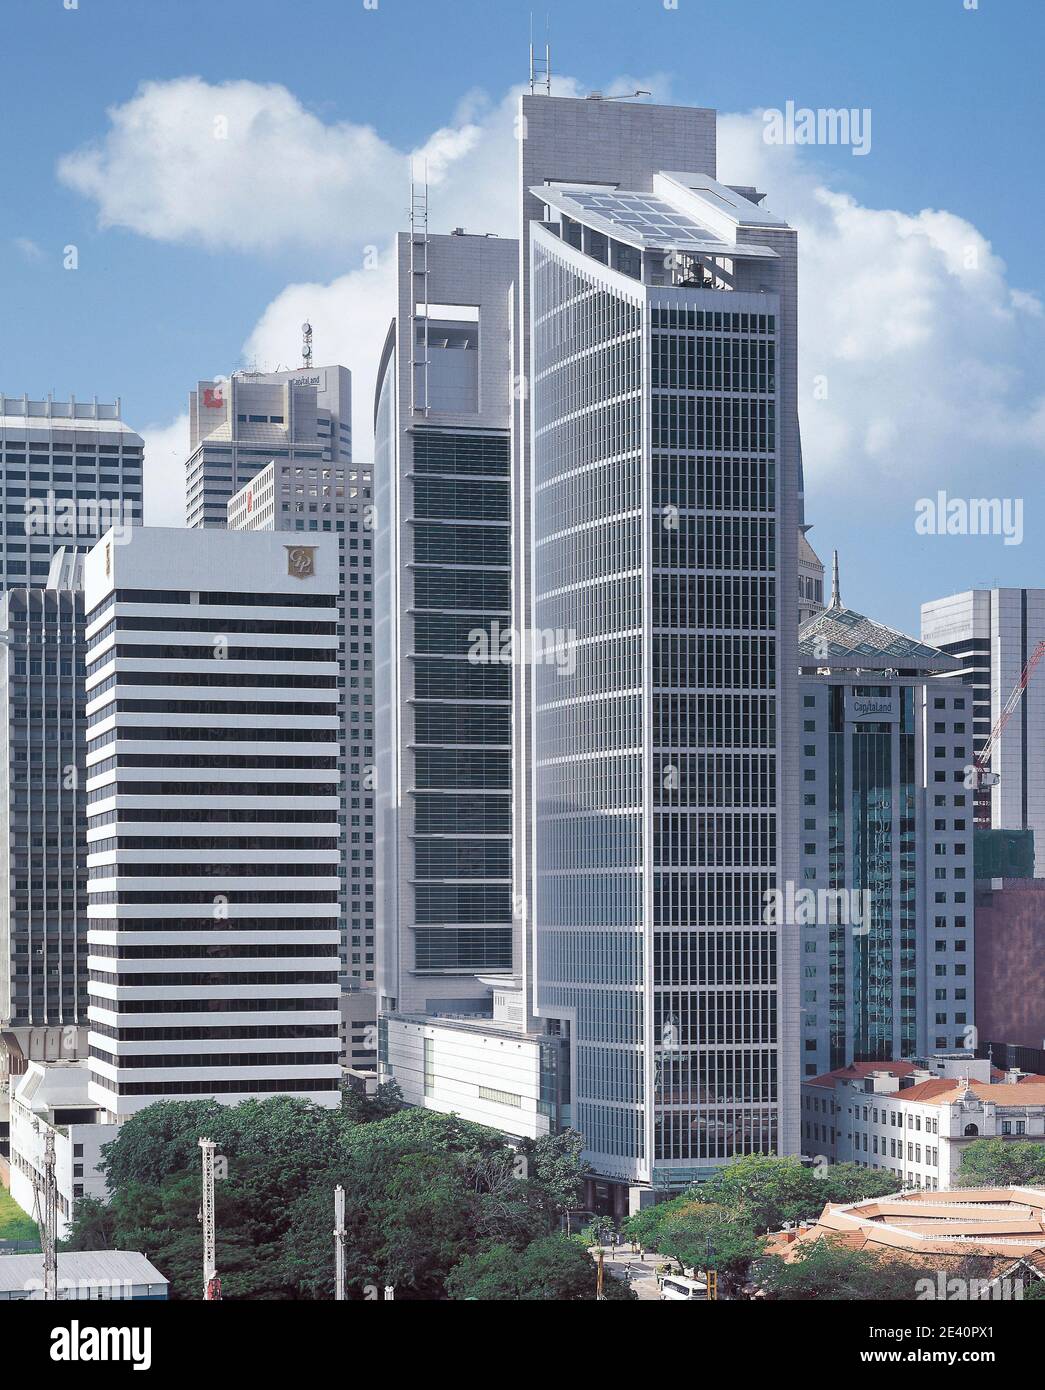 DOM028, SGX centres Singapore, Kohn, Pedersen Fox, hochhaus, high-rise building, multi-story building, grattacielo, rascacielos, SGX centres Singapore Stock Photo